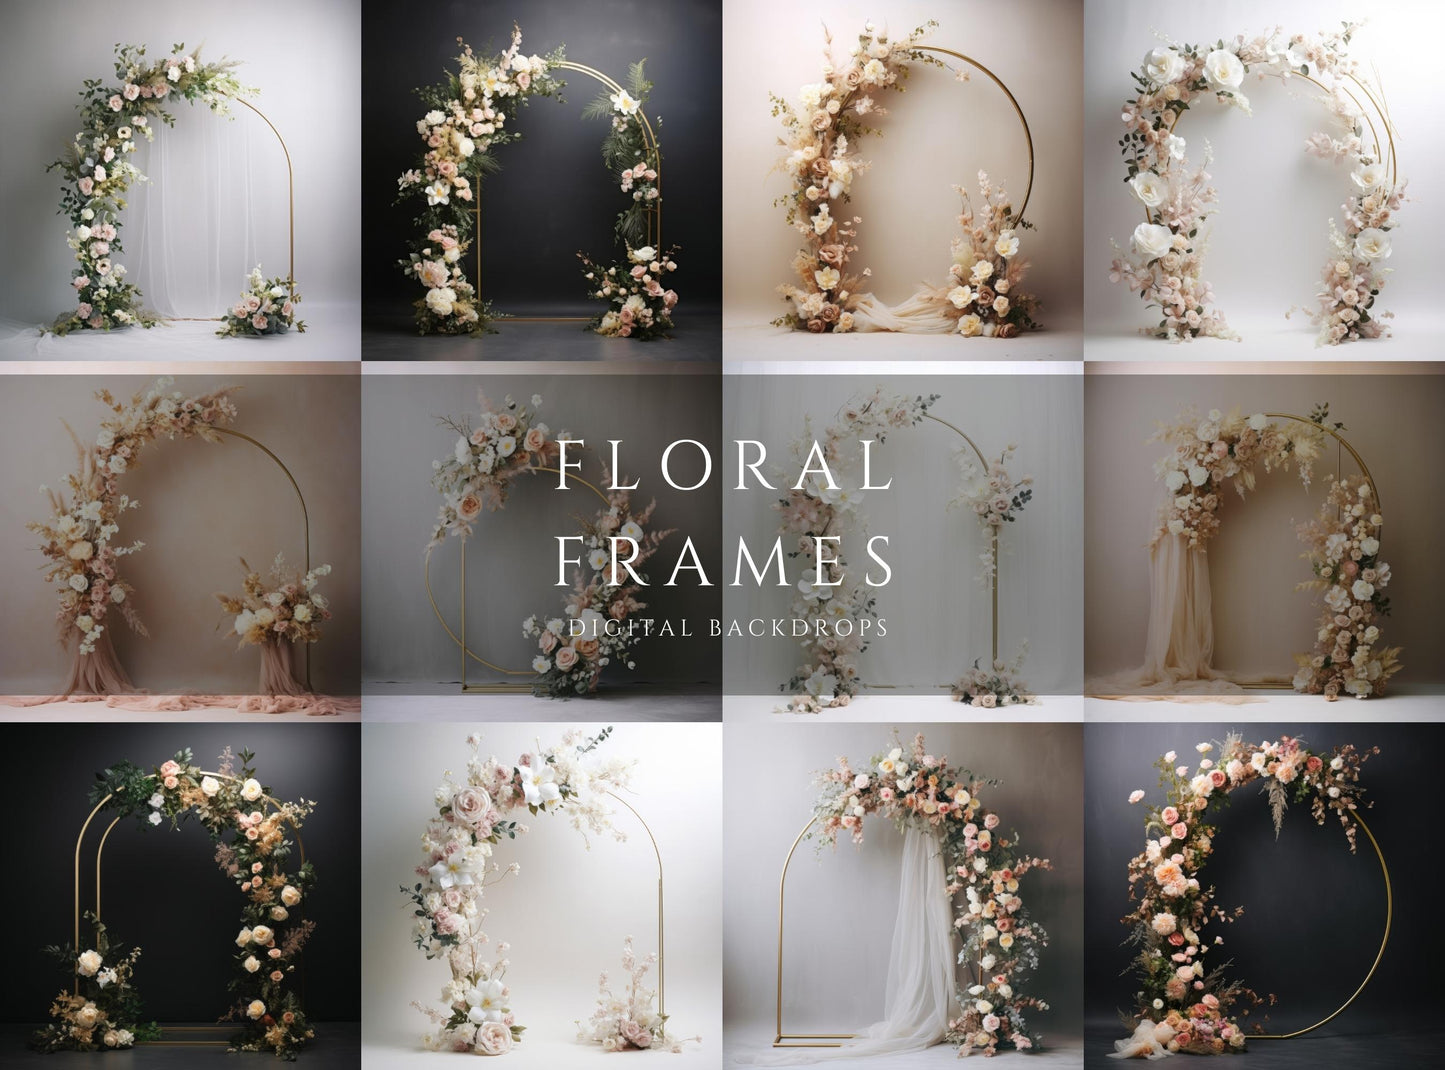 Floral Frames Editorial Digital Backdrops